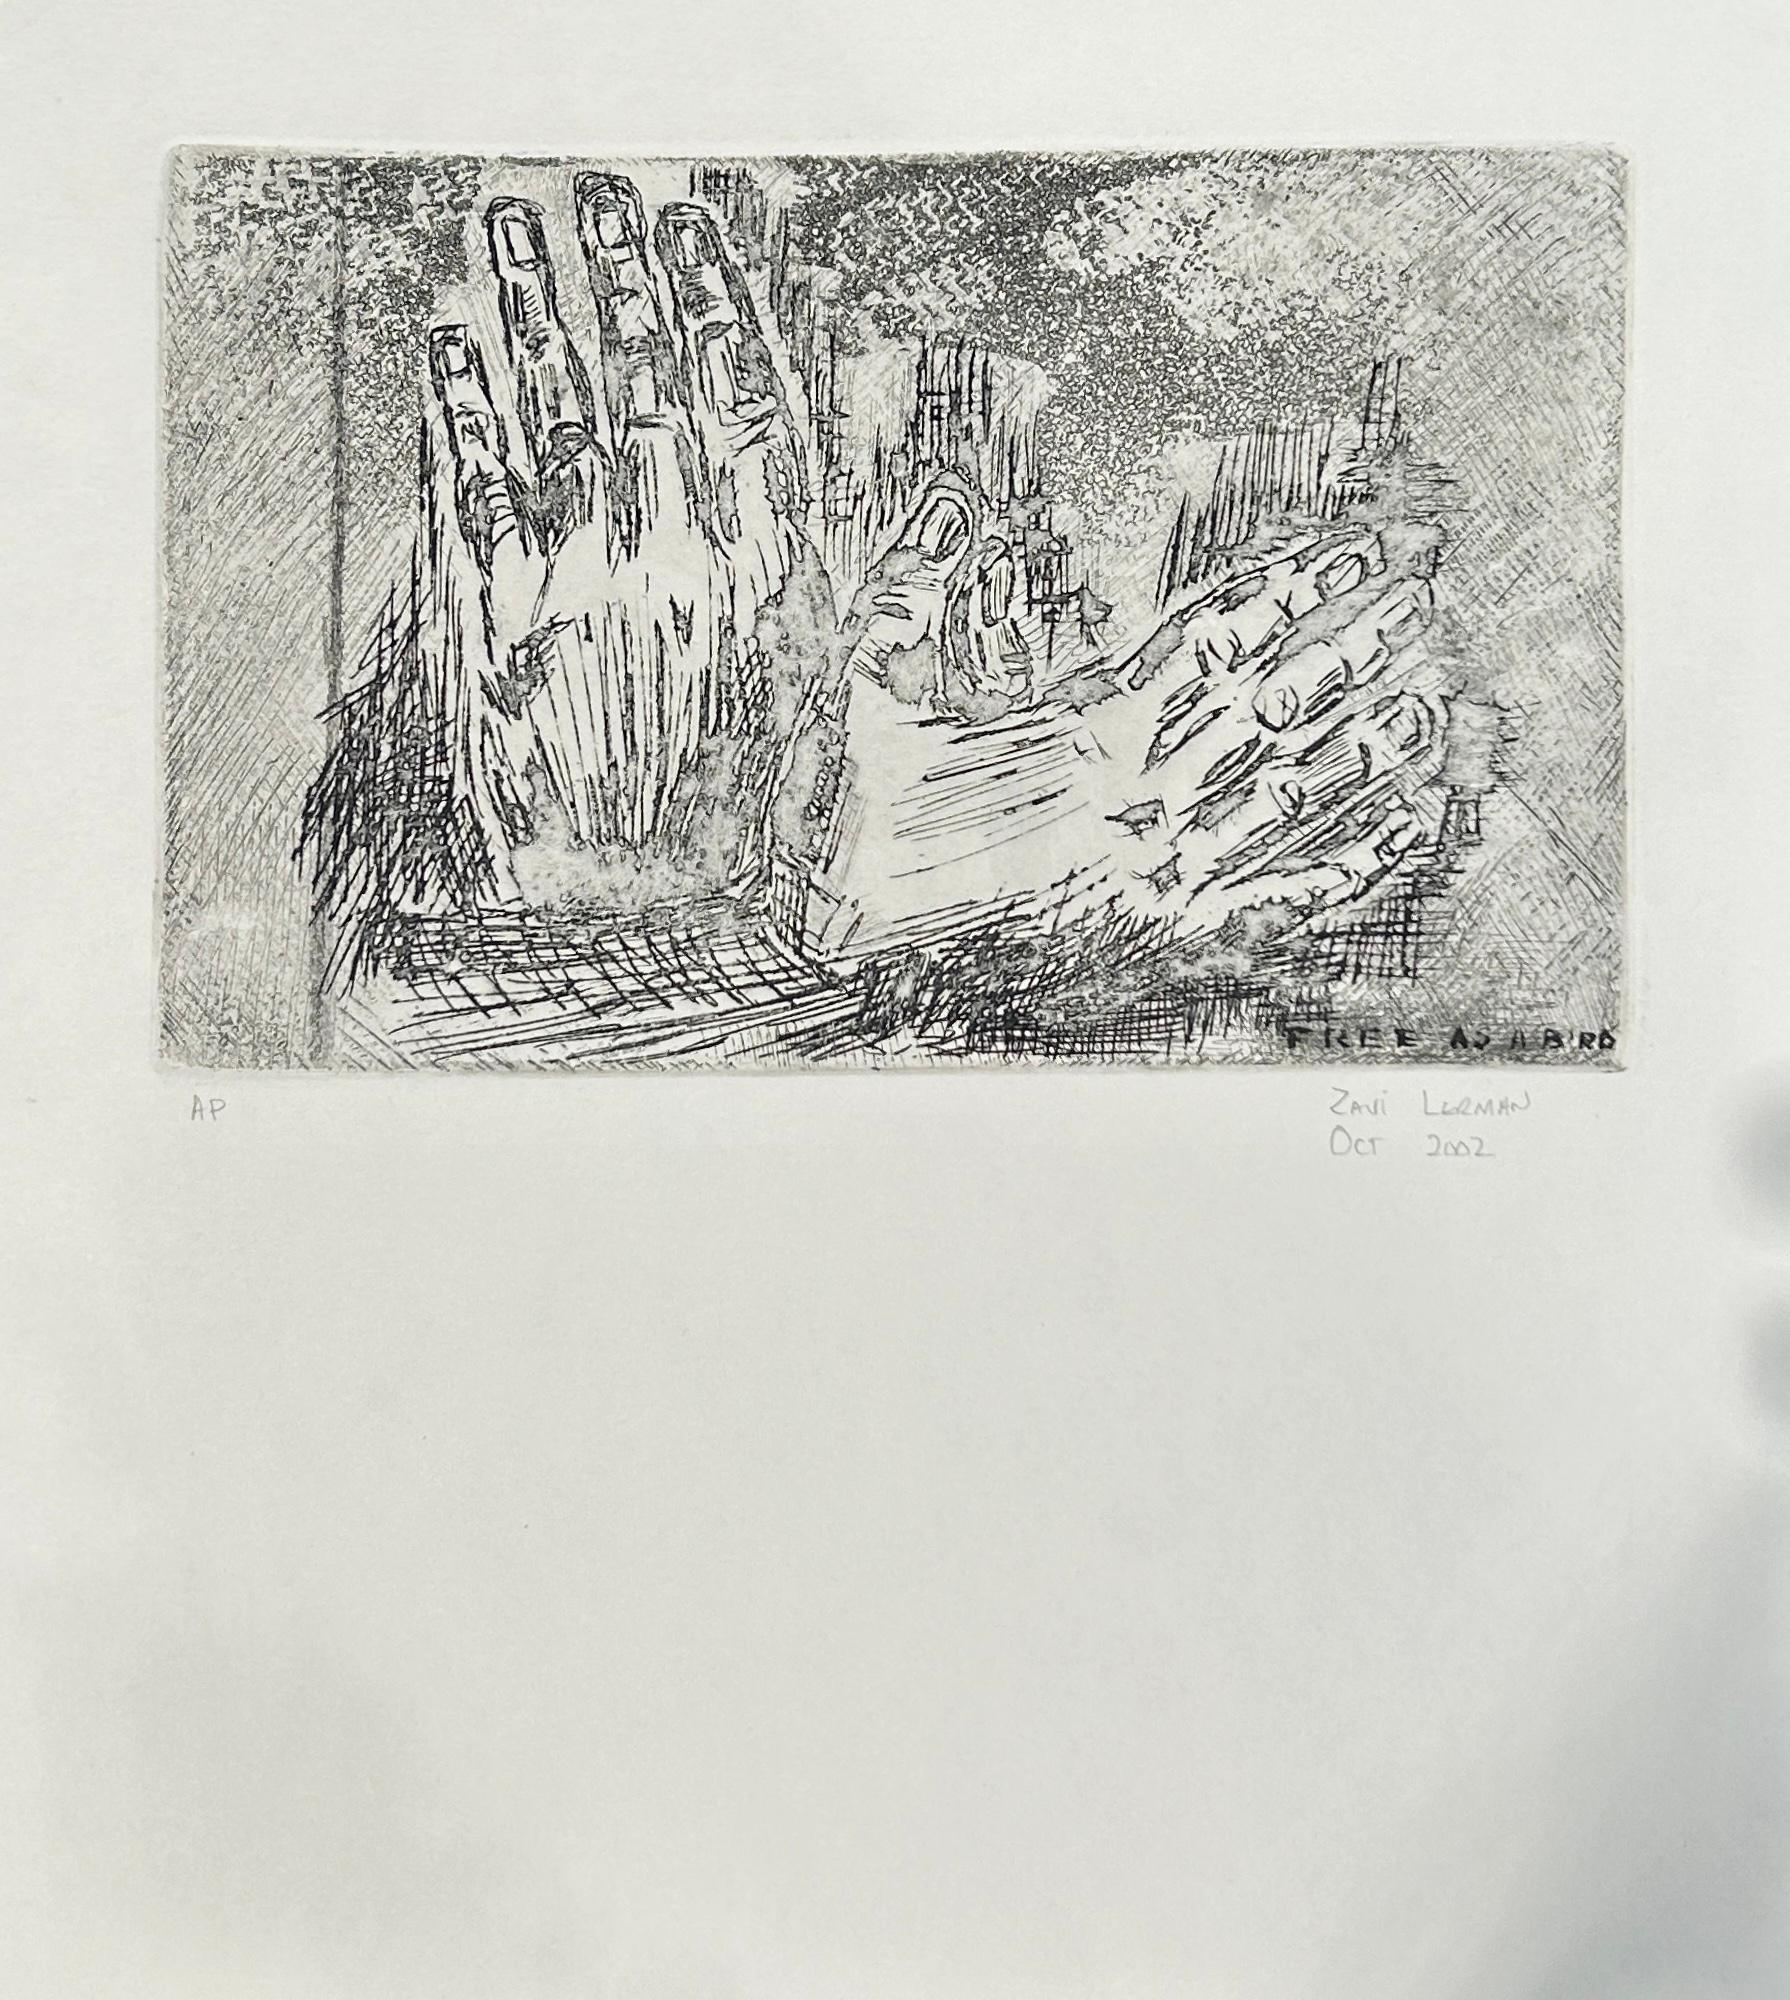 Zavi Lerman Figurative Print - Hands (Free As A Bird)